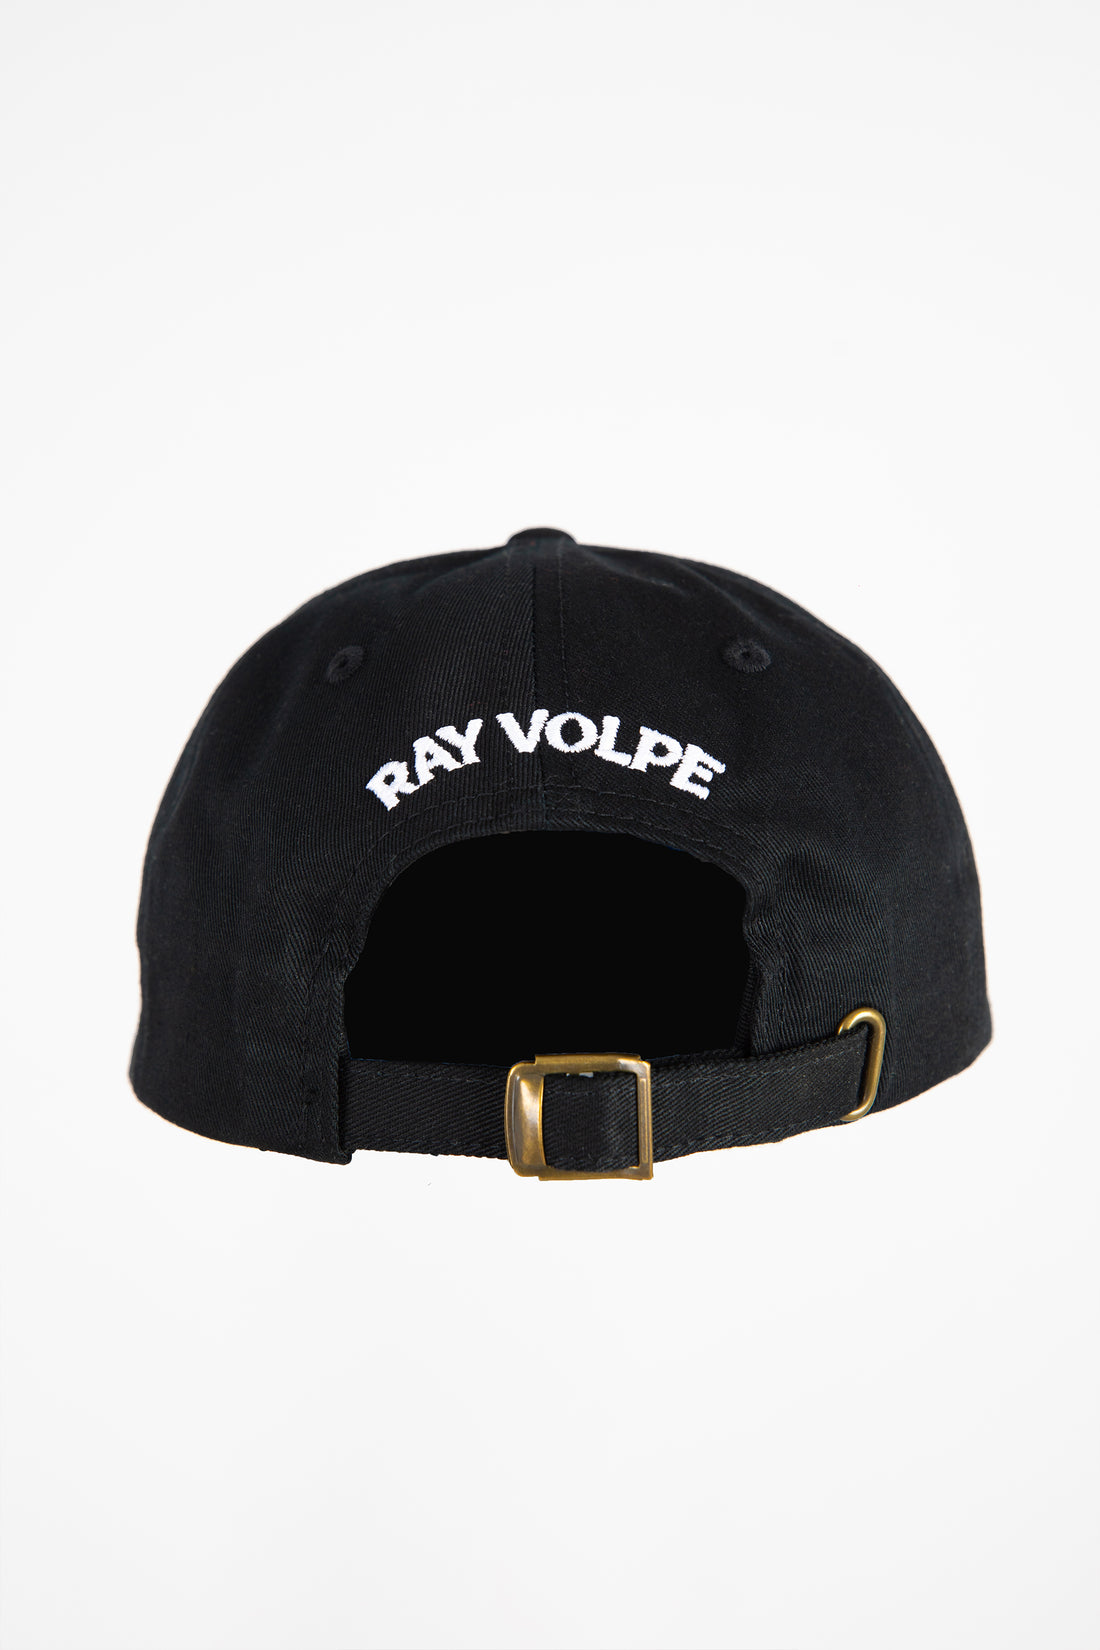 Ray Volpe - Eat Sleep Rage - Dad Hat